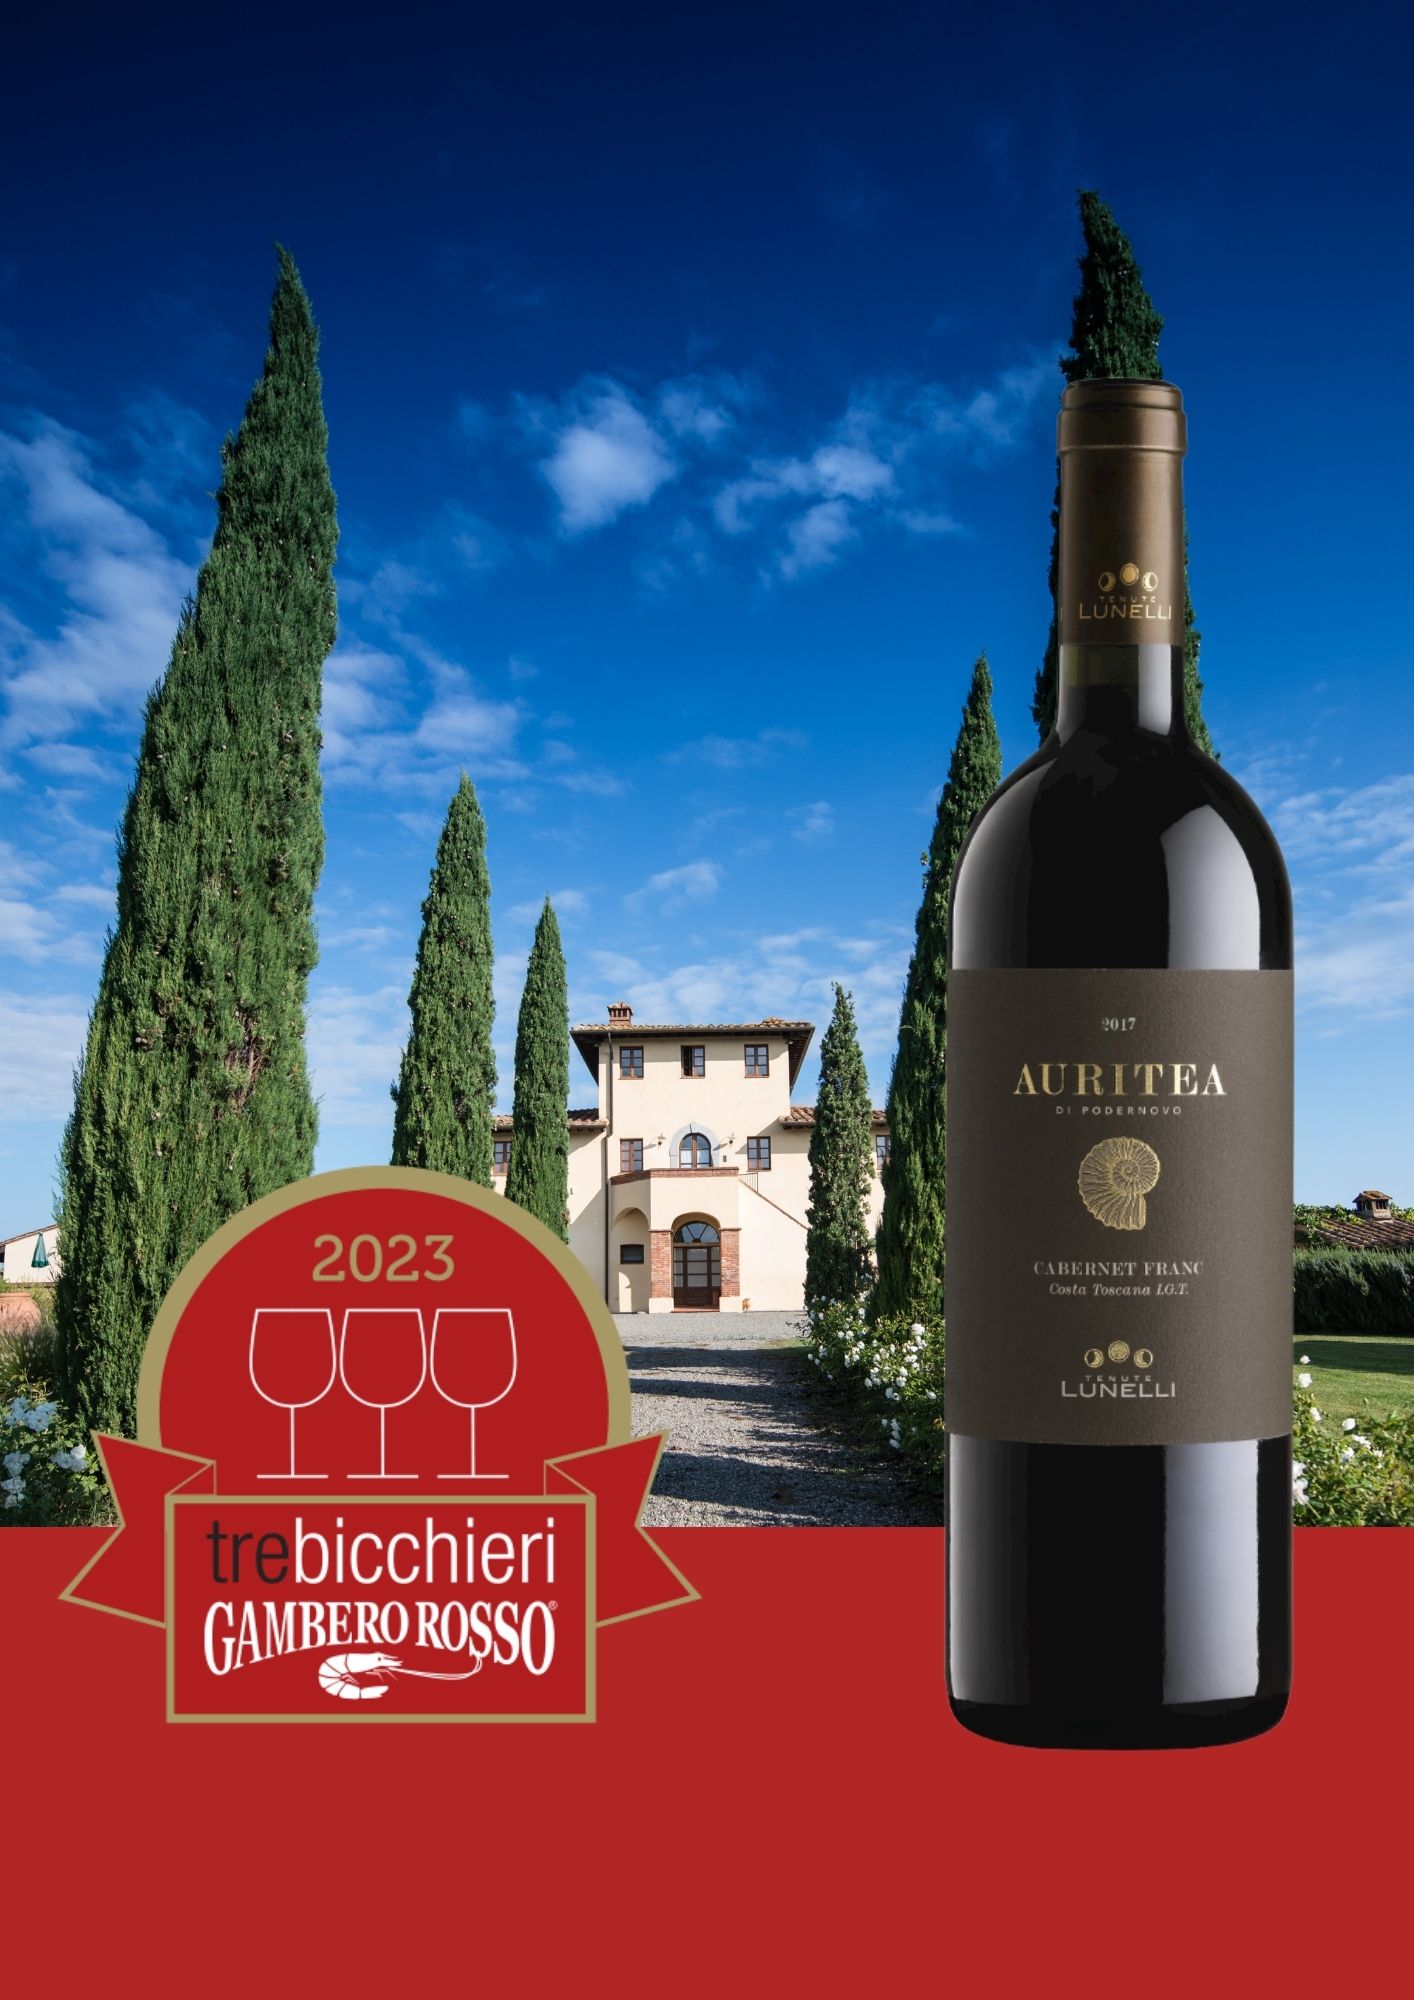 Auritea 2017 wins the Tre Bicchieri